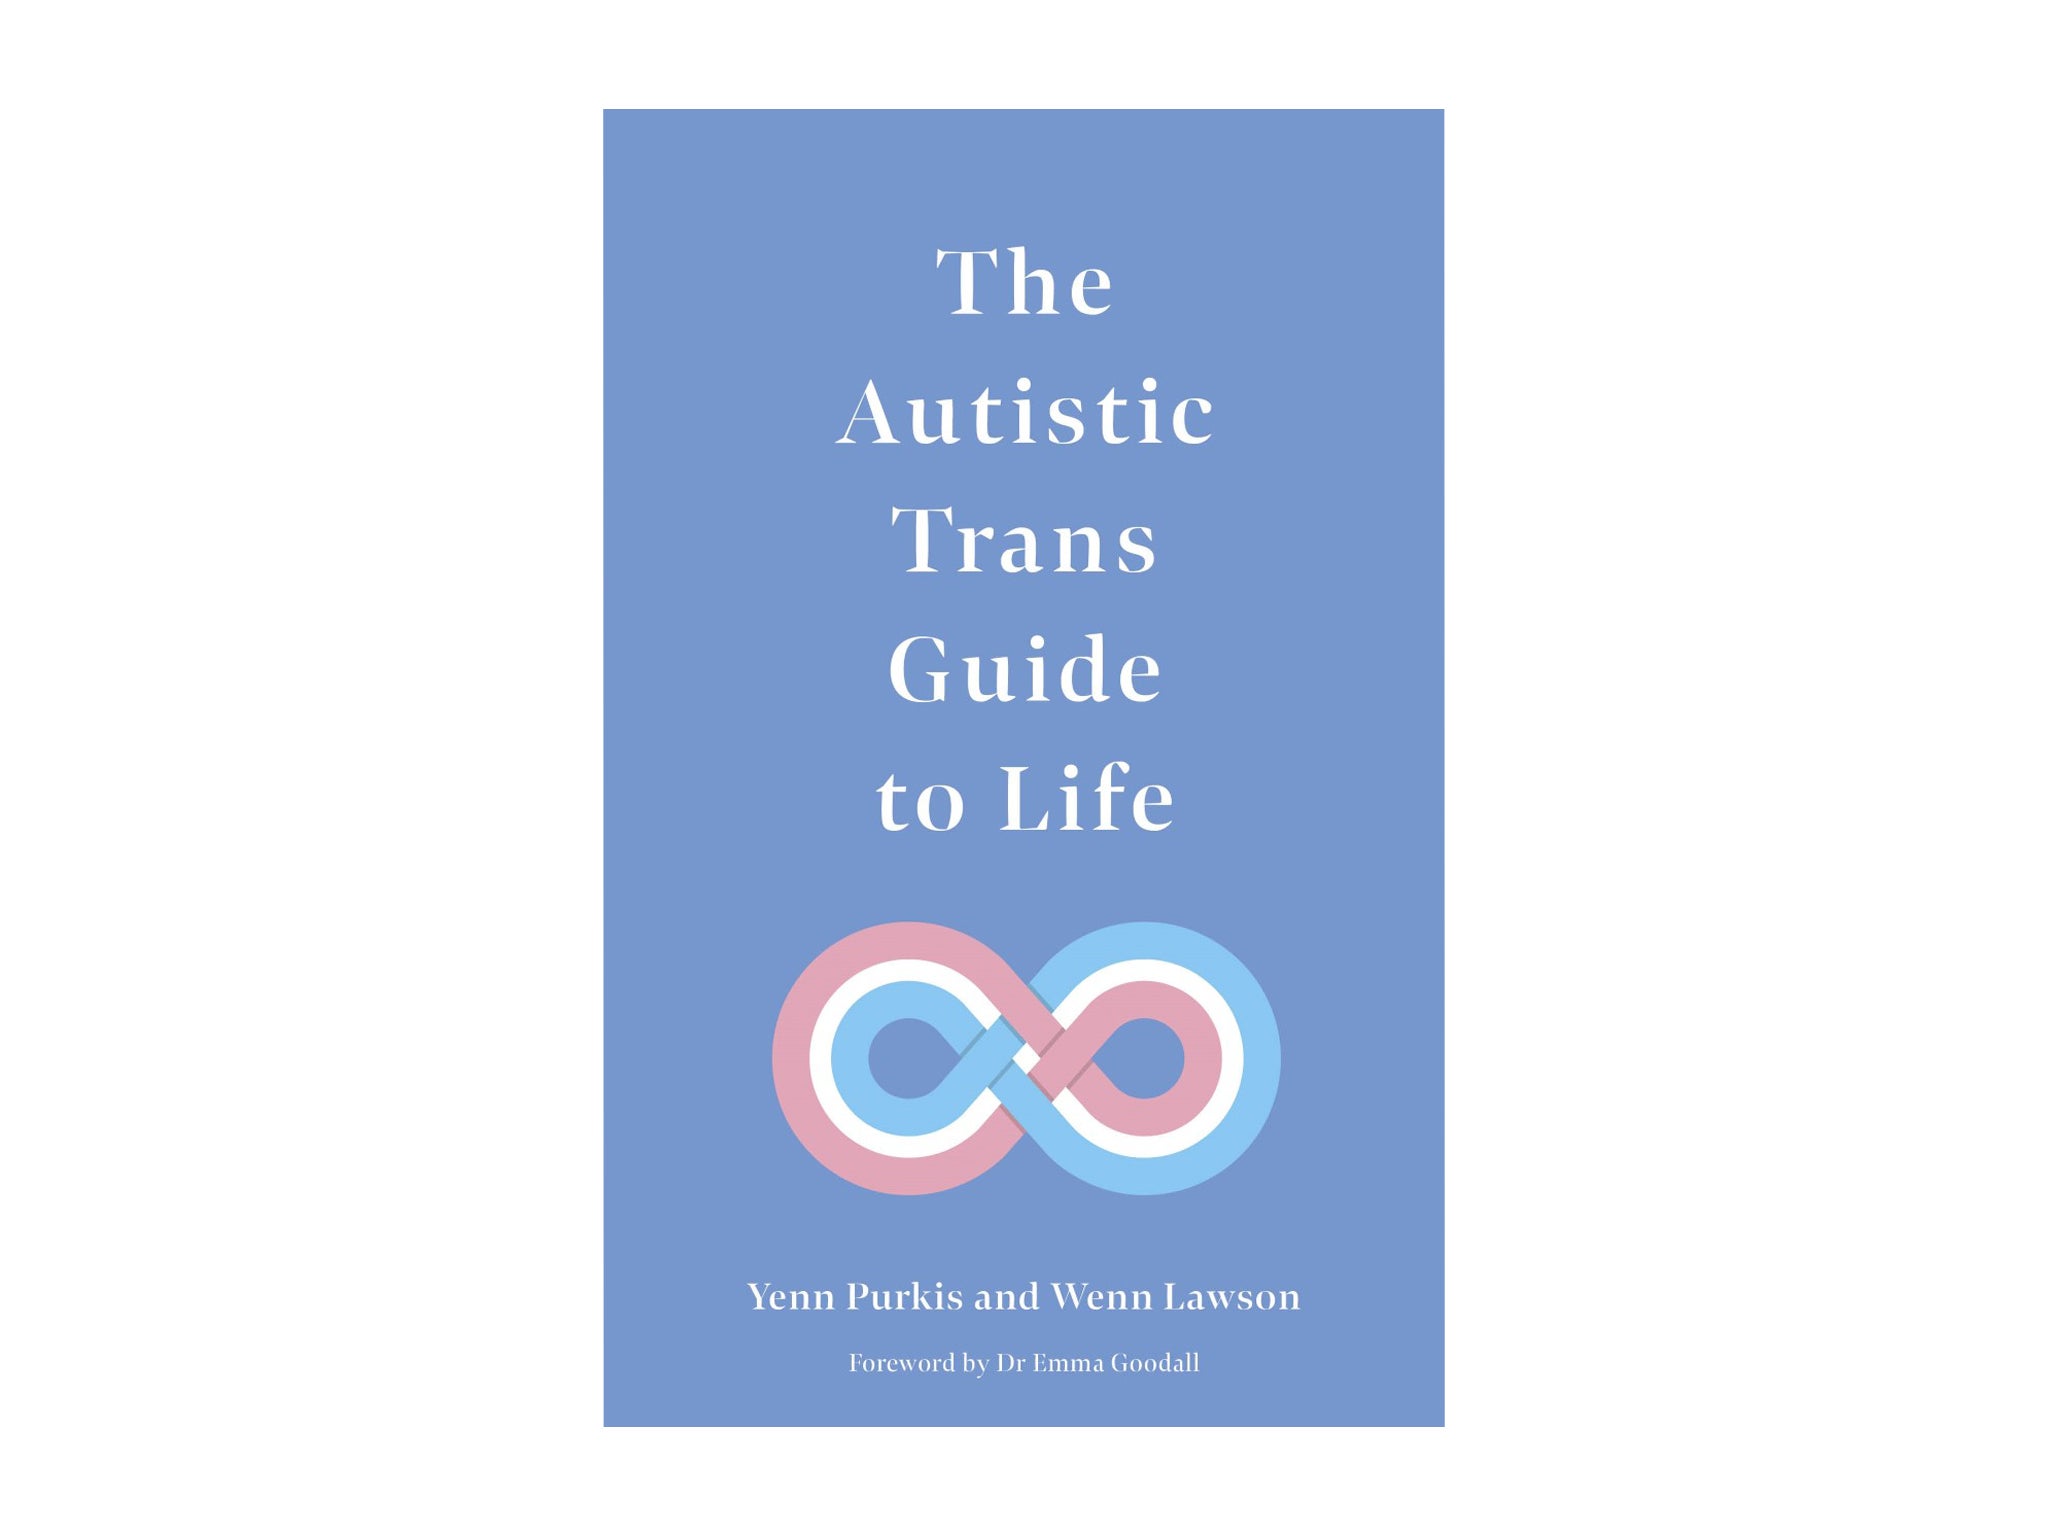 Austic trans guide .jpg